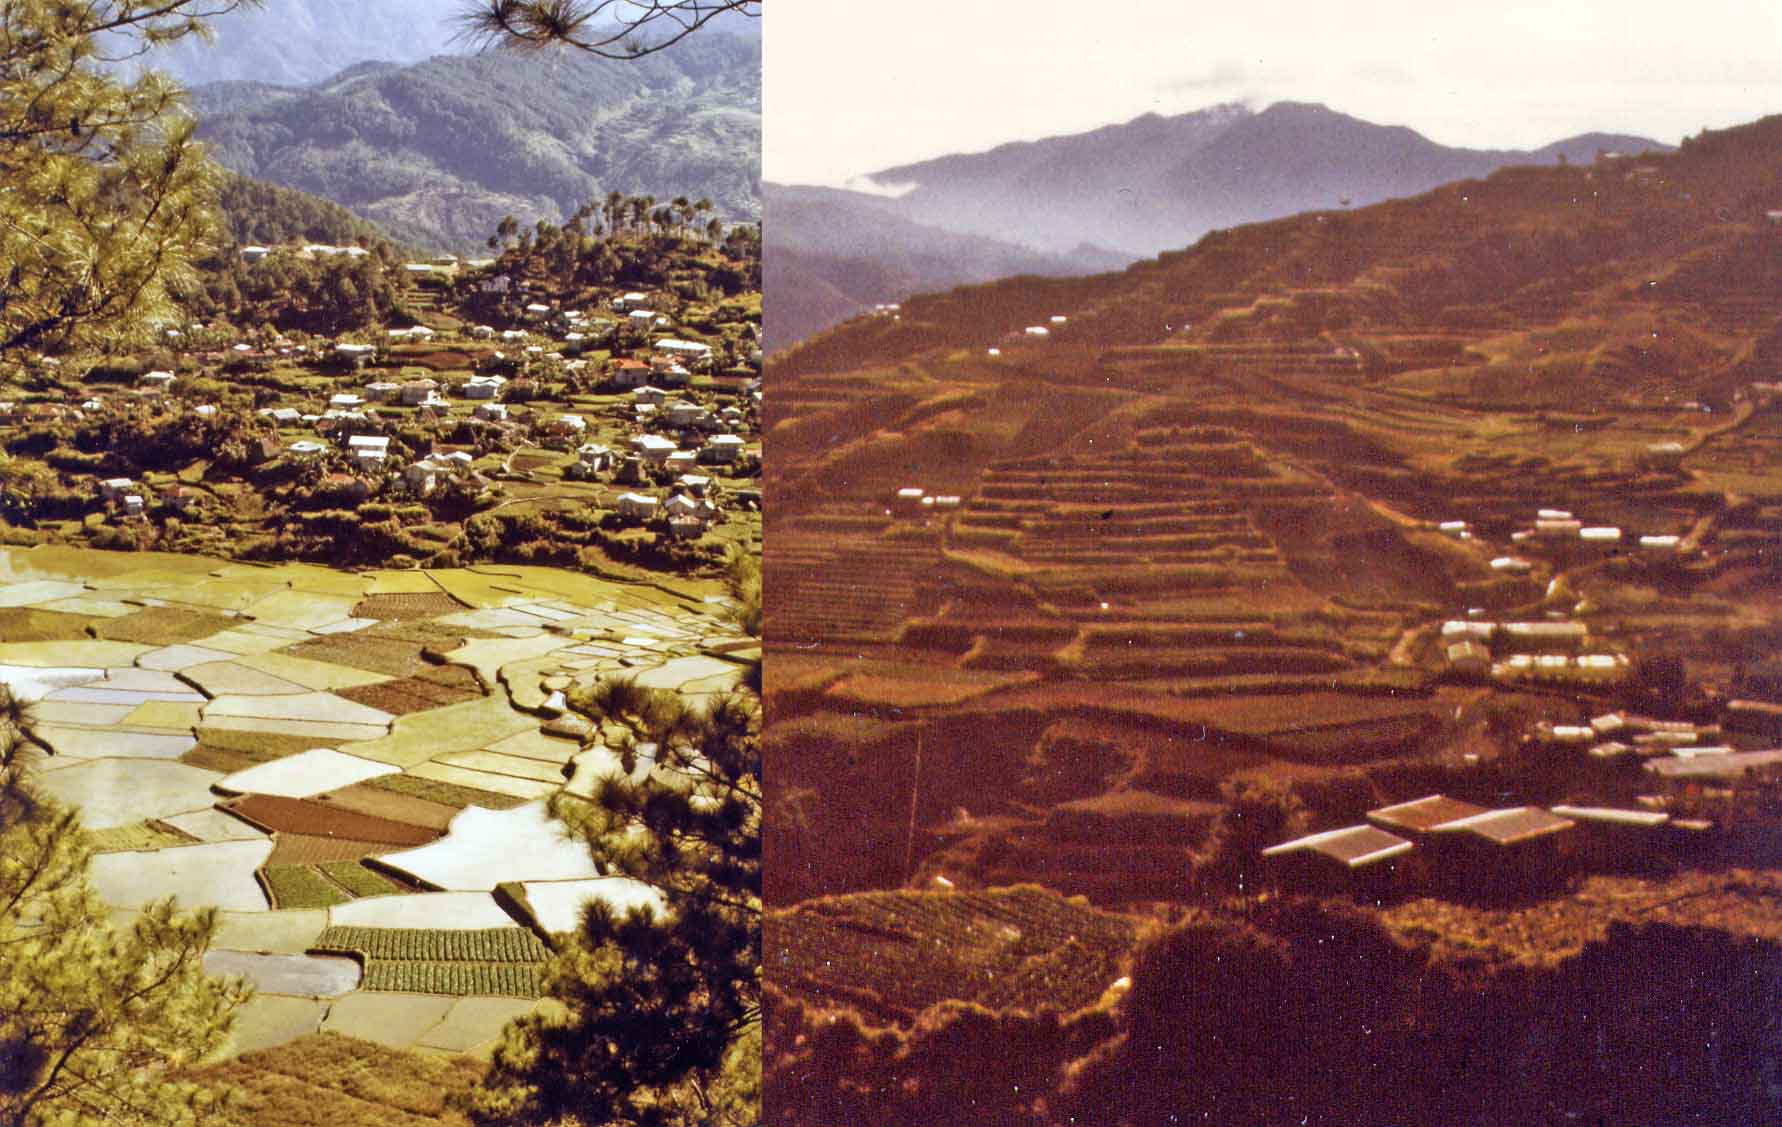 Rice terraces in Sagada